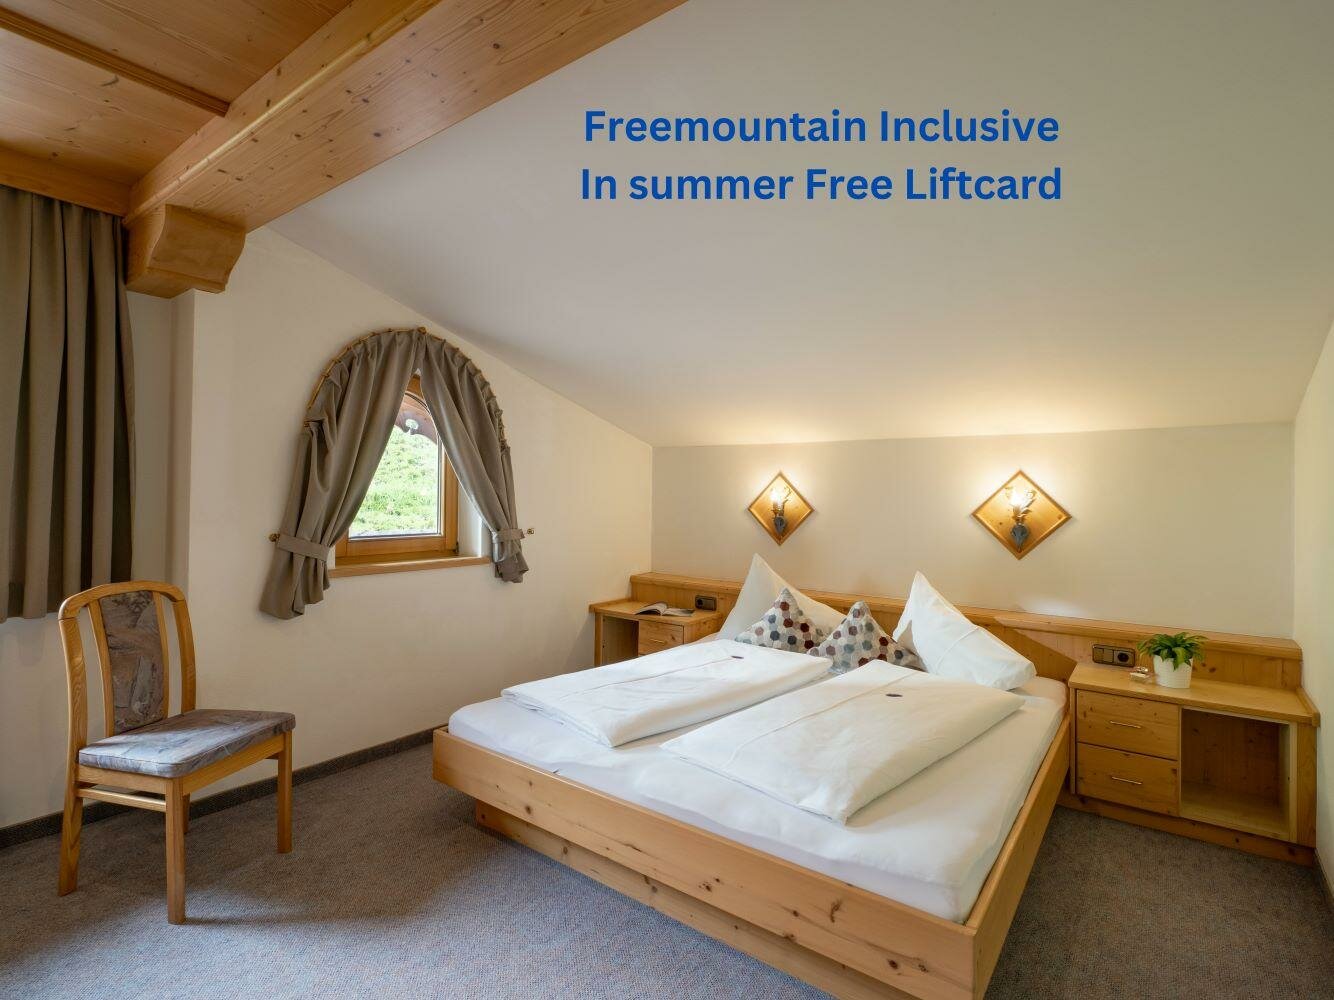 Freemountain-Inclusive-In-summer-Free-Liftcard-4.jpg